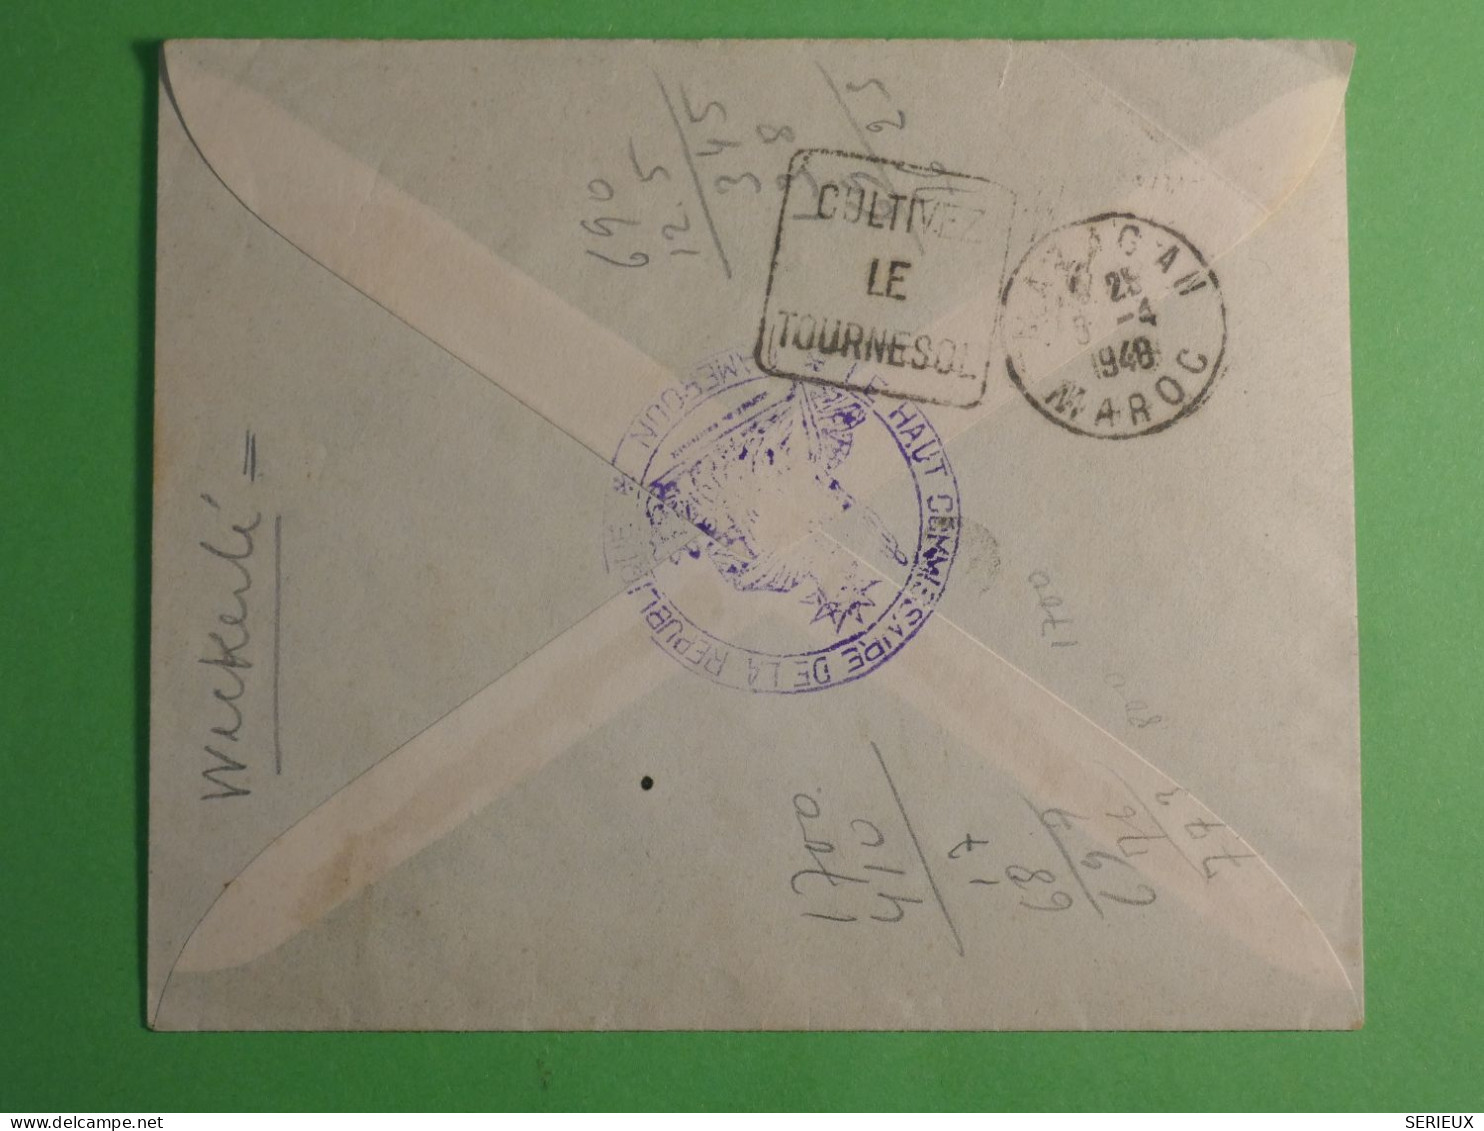 DN9 CAMEROUN  LETTRE OFFICIELLE  1949  A MAZAGAN  MAROC  ++  AEROPHILATELIE + AFF.  INTERESSANT+++ - Briefe U. Dokumente